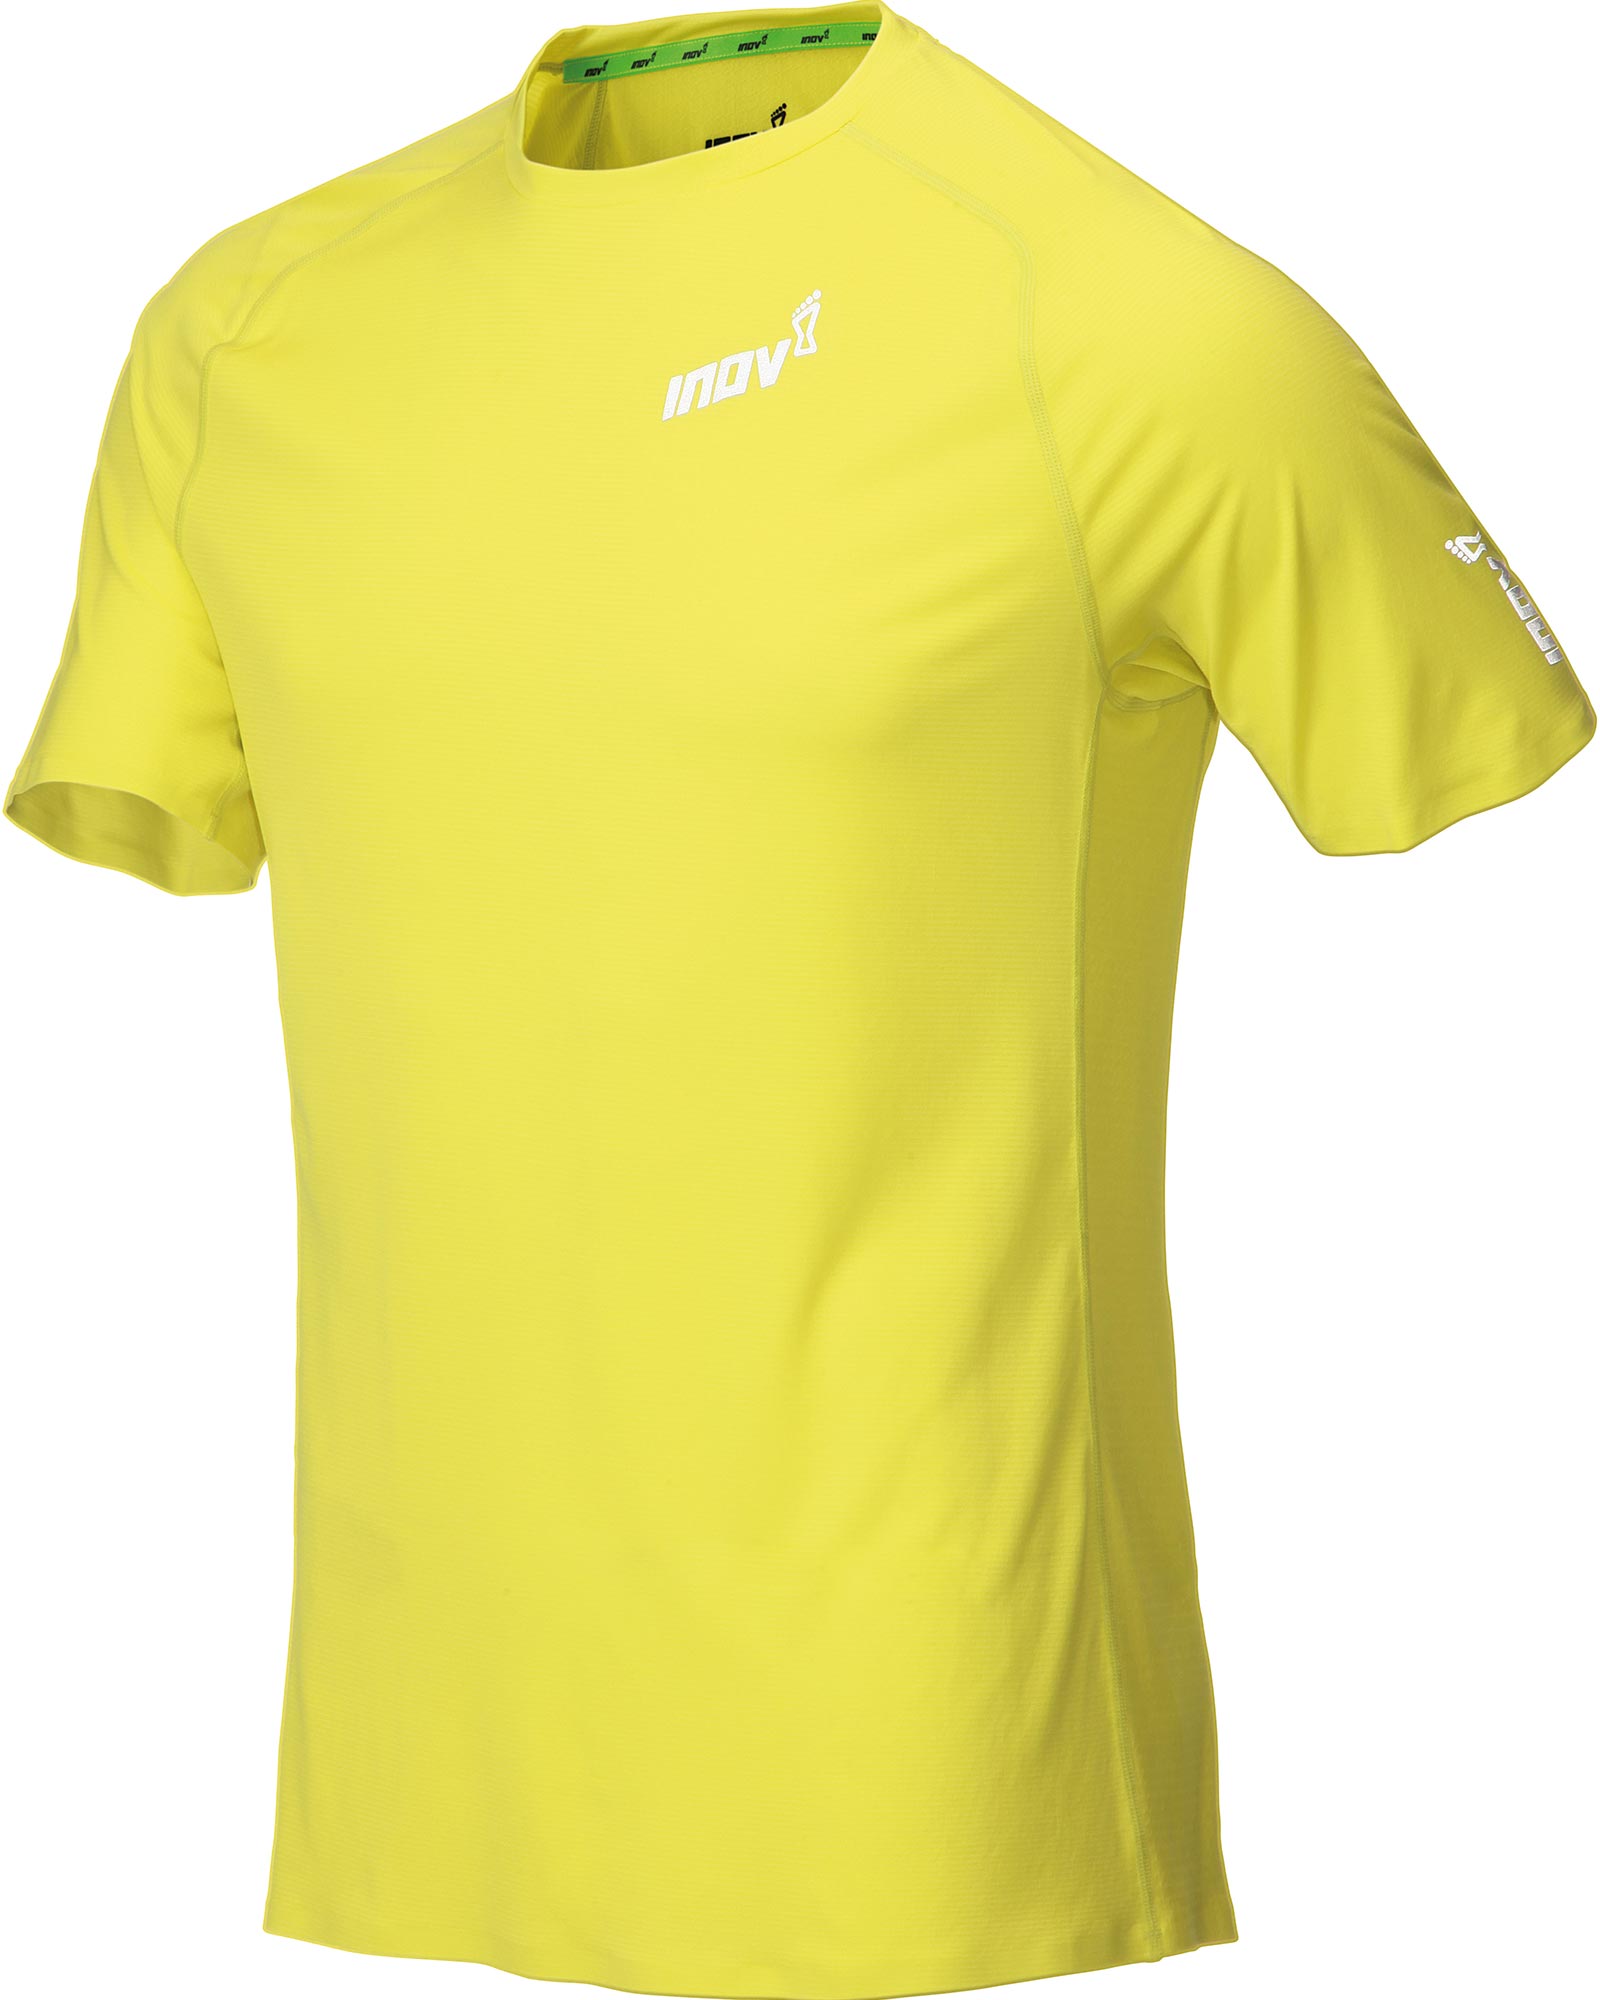 Inov 8 Base Elite Men’s T Shirt - Yellow XL